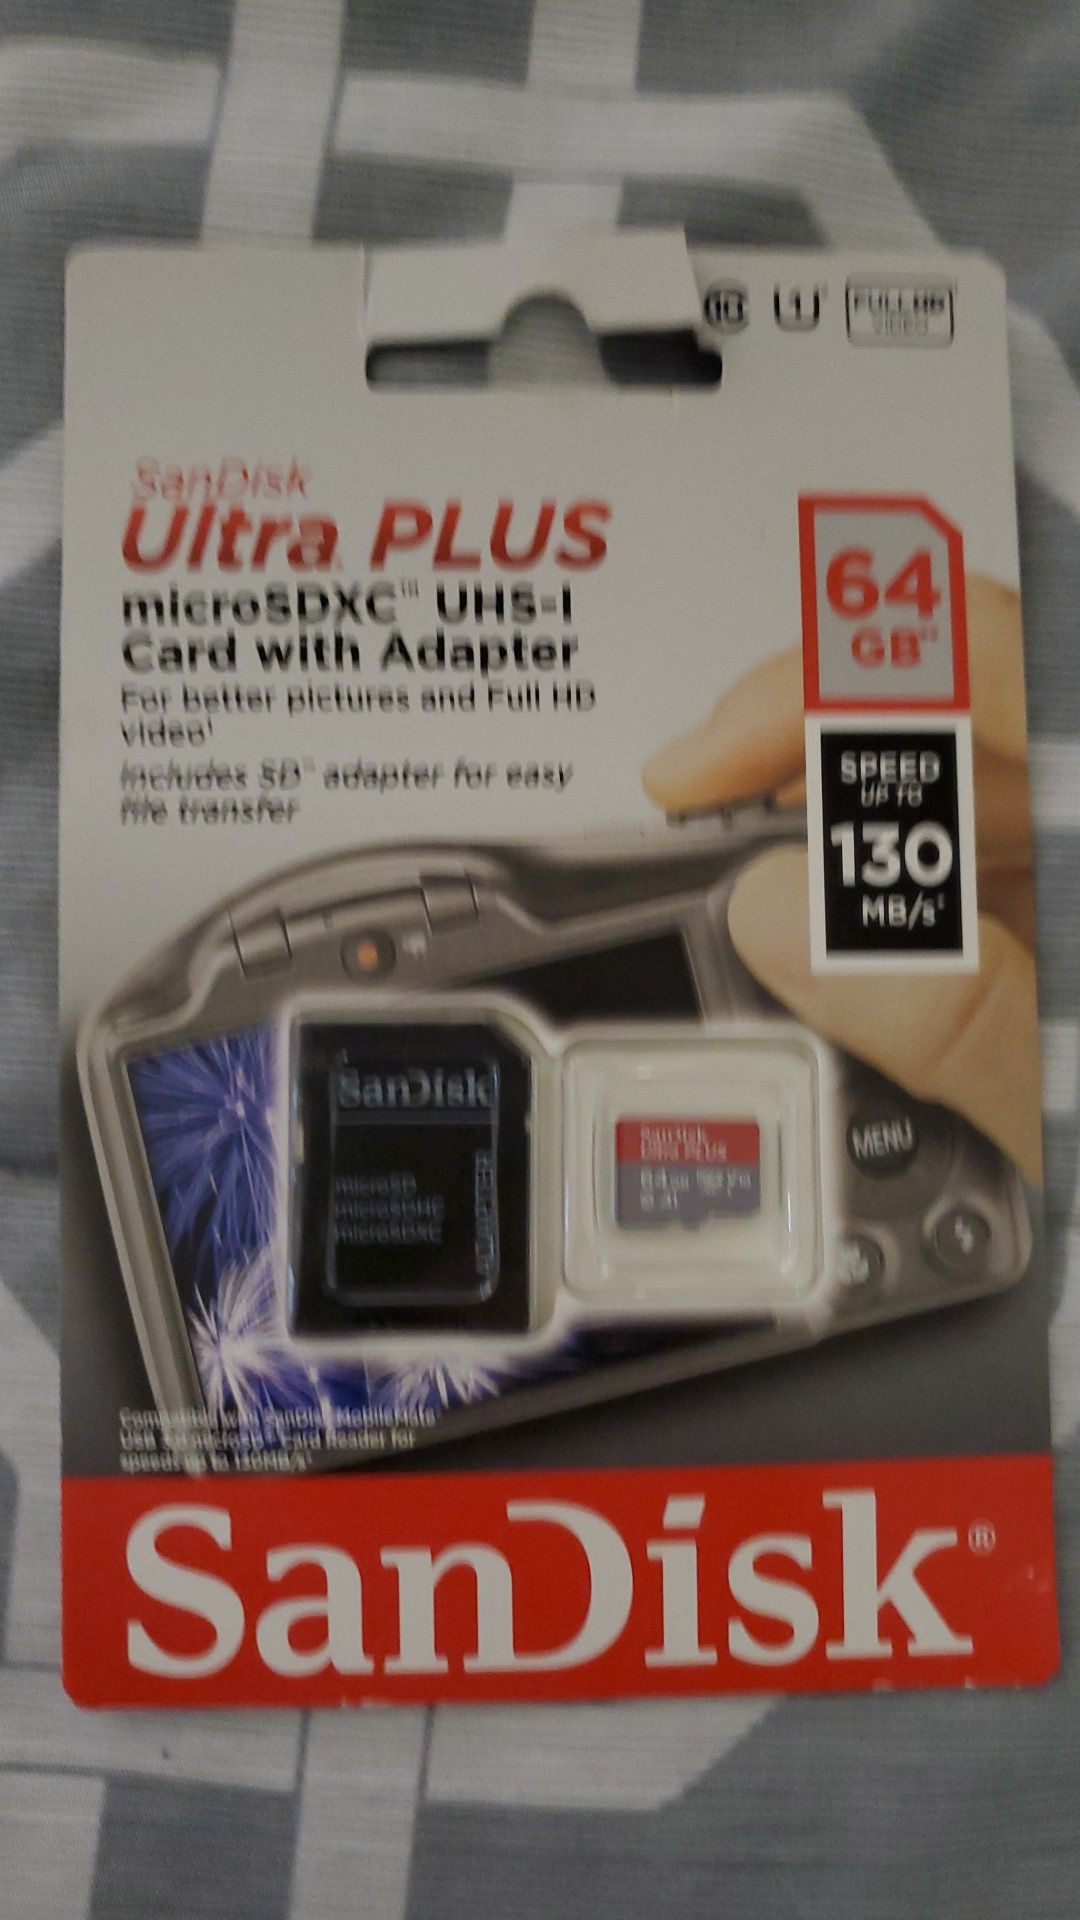 San disk micro sd card 64gb @BRANDNEW$$$